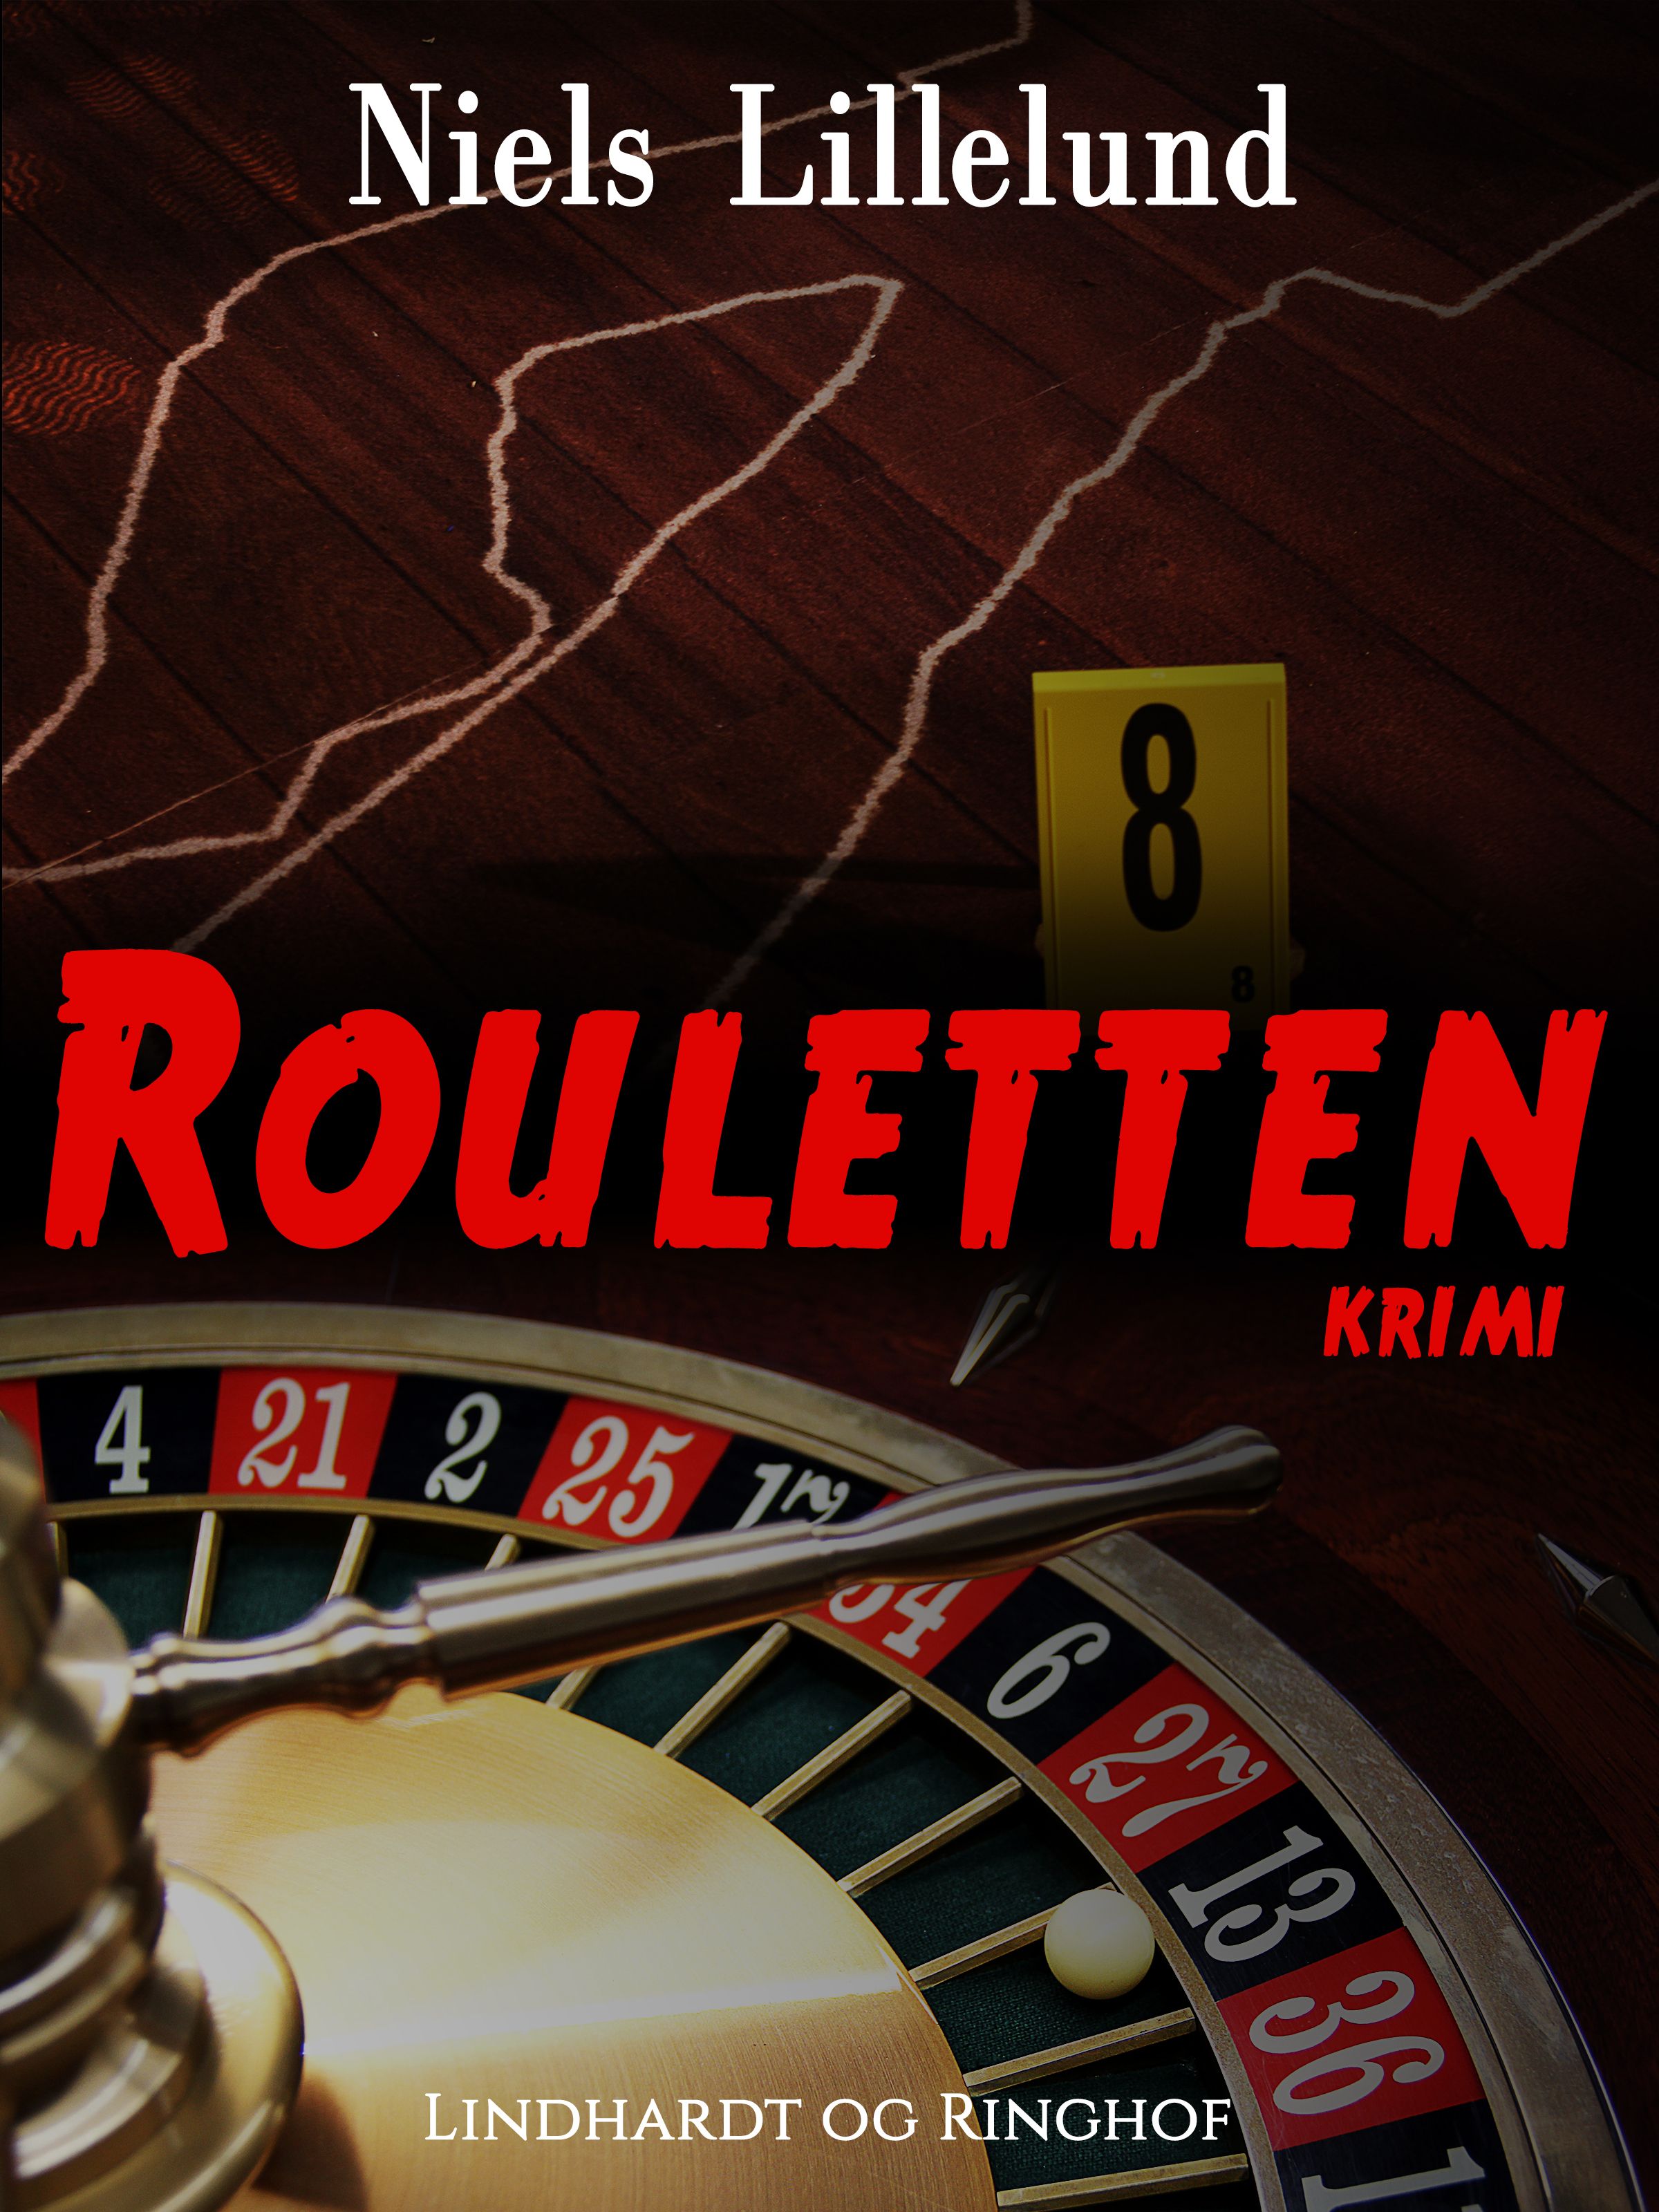 Rouletten, eBook by Niels Lillelund